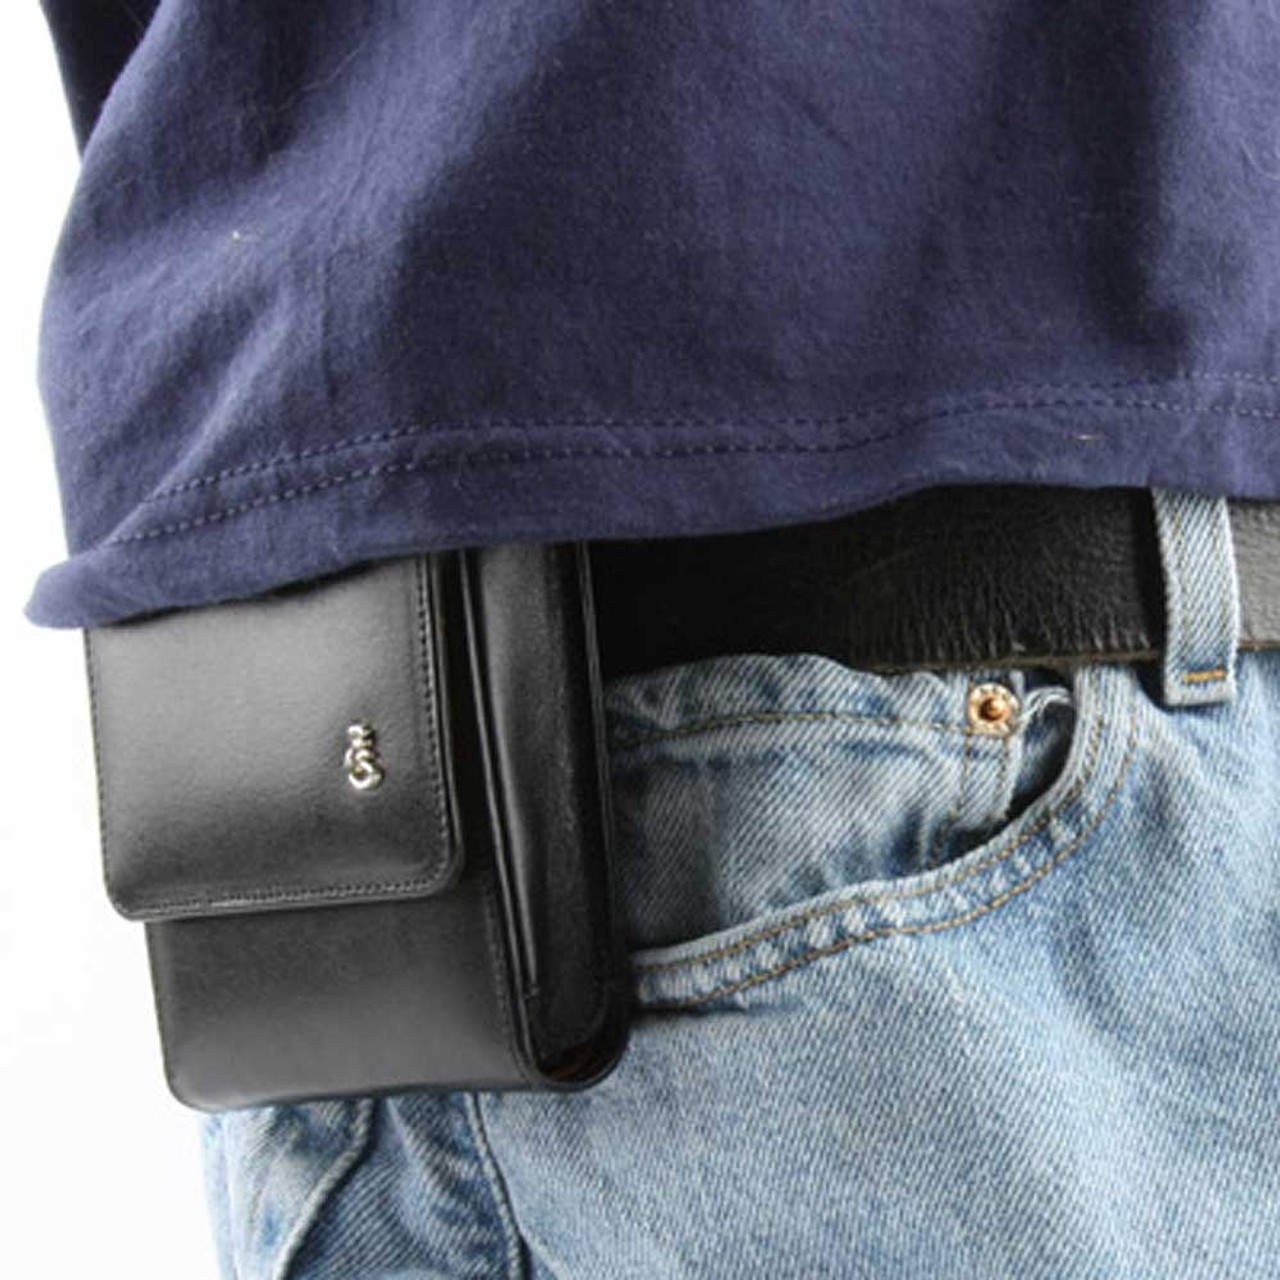 Kahr S9 Concealed Carry Holster (Belt Loop)